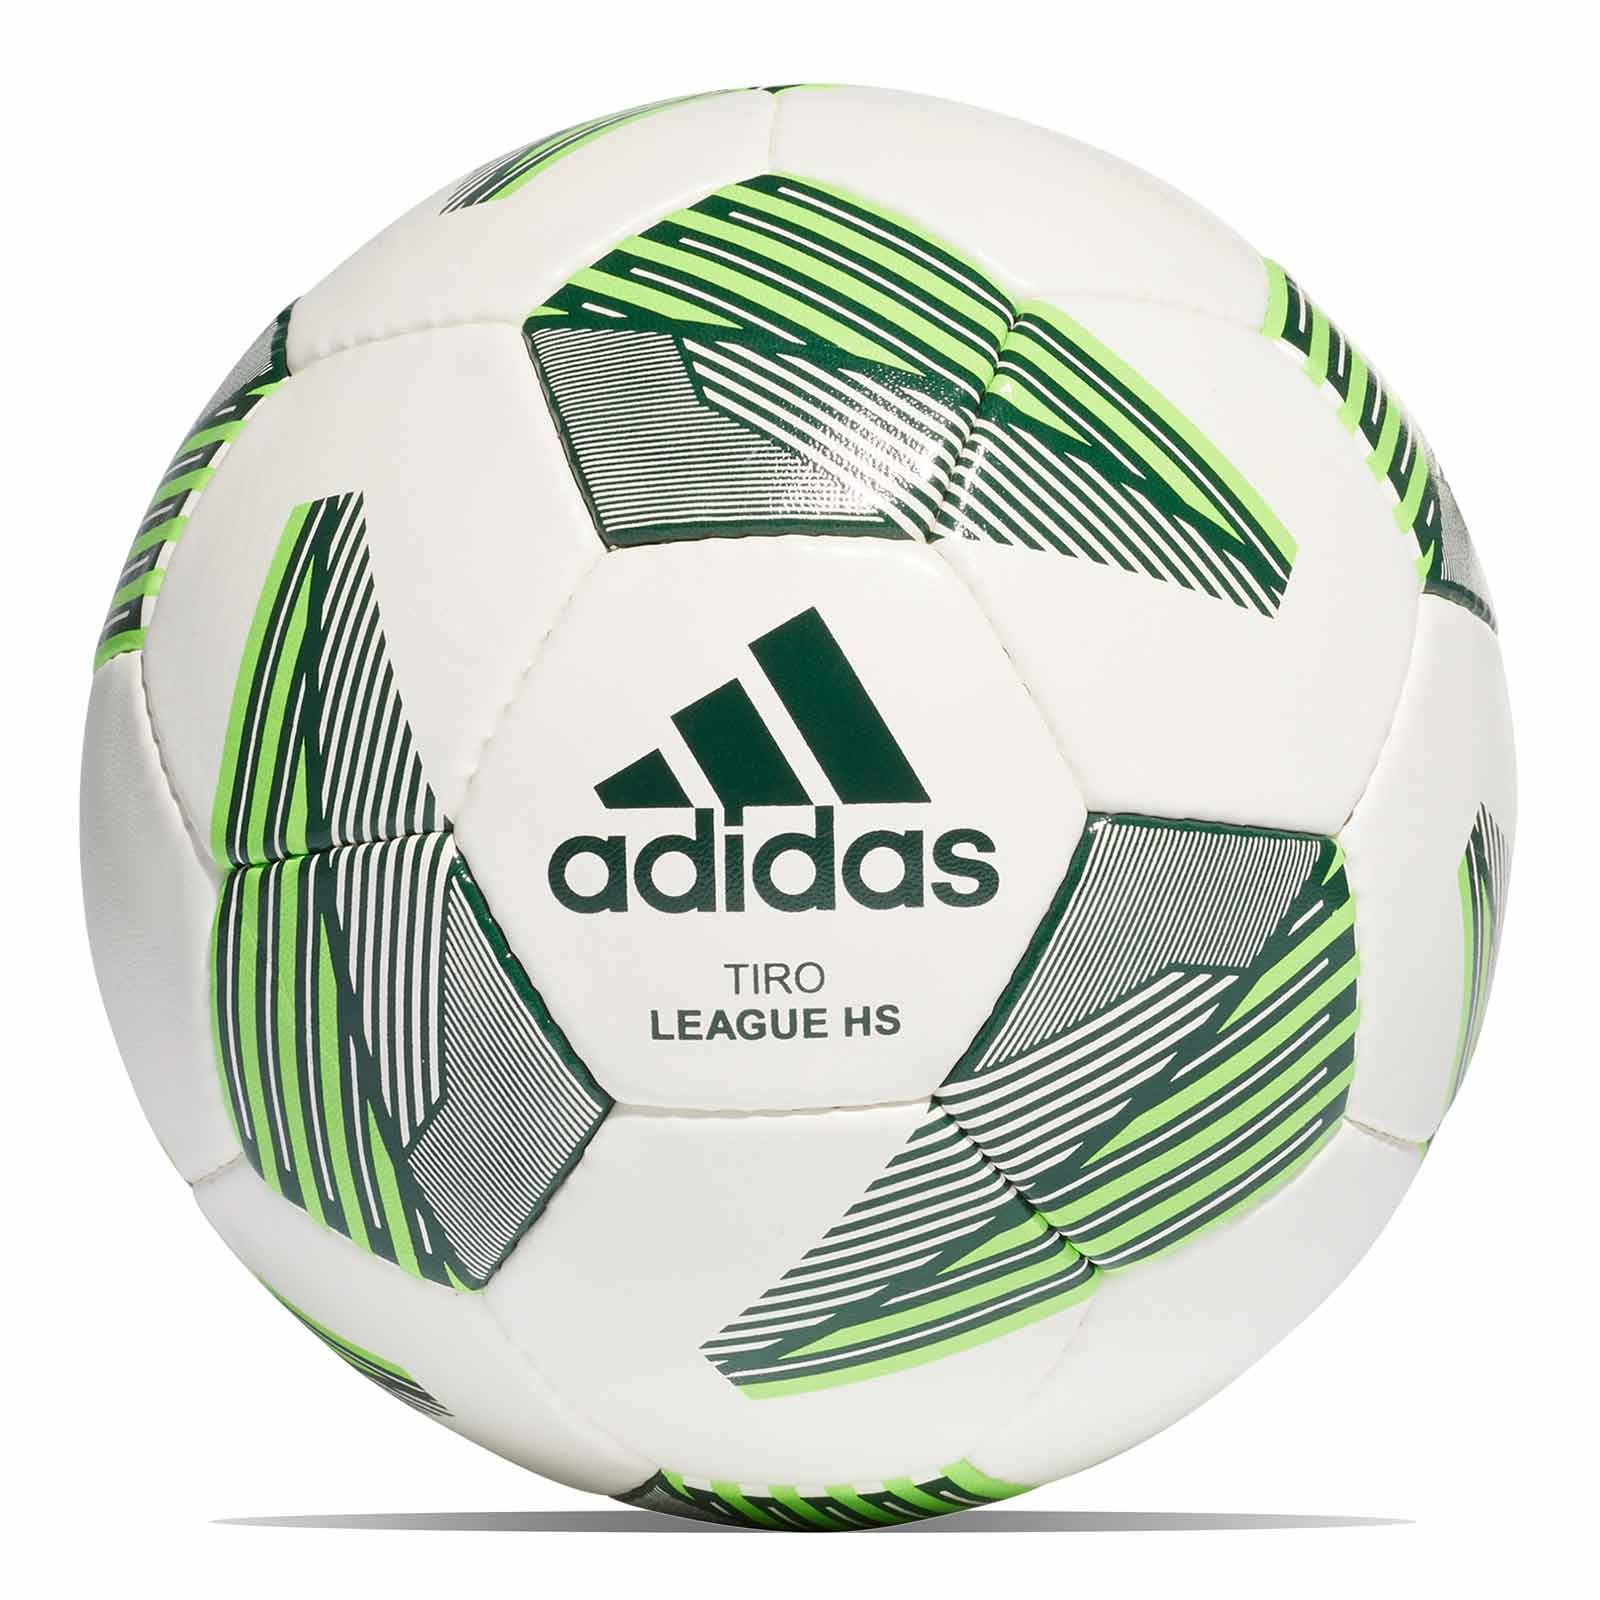 Excavación agudo quiero Balón adidas Tiro League HS talla 5 blanco y verde | futbolmania